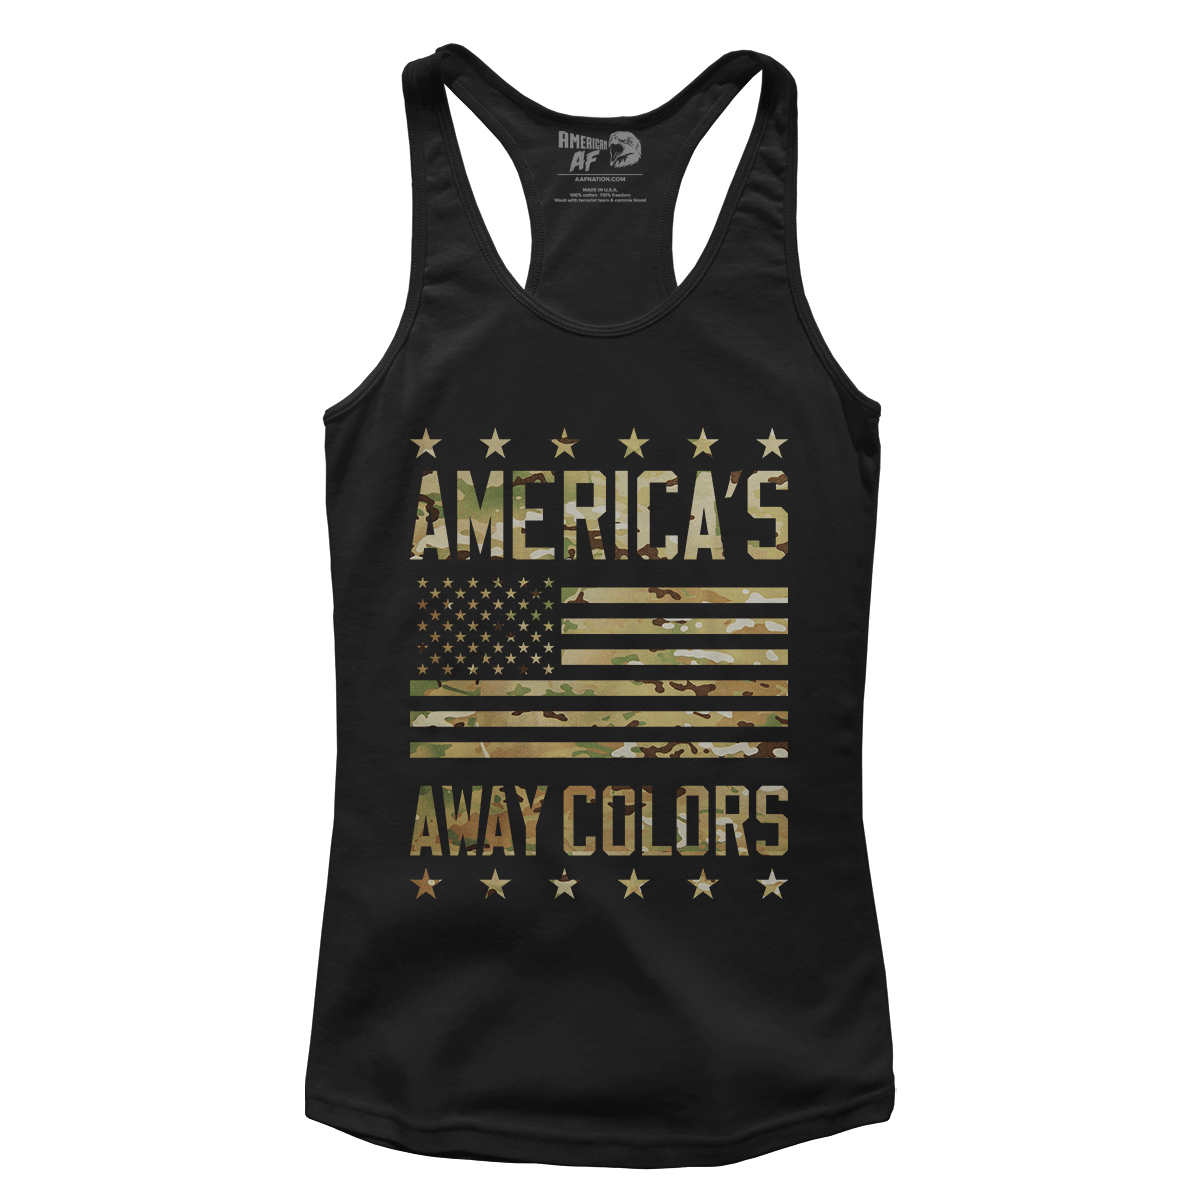 America's Away Colors (Ladies)